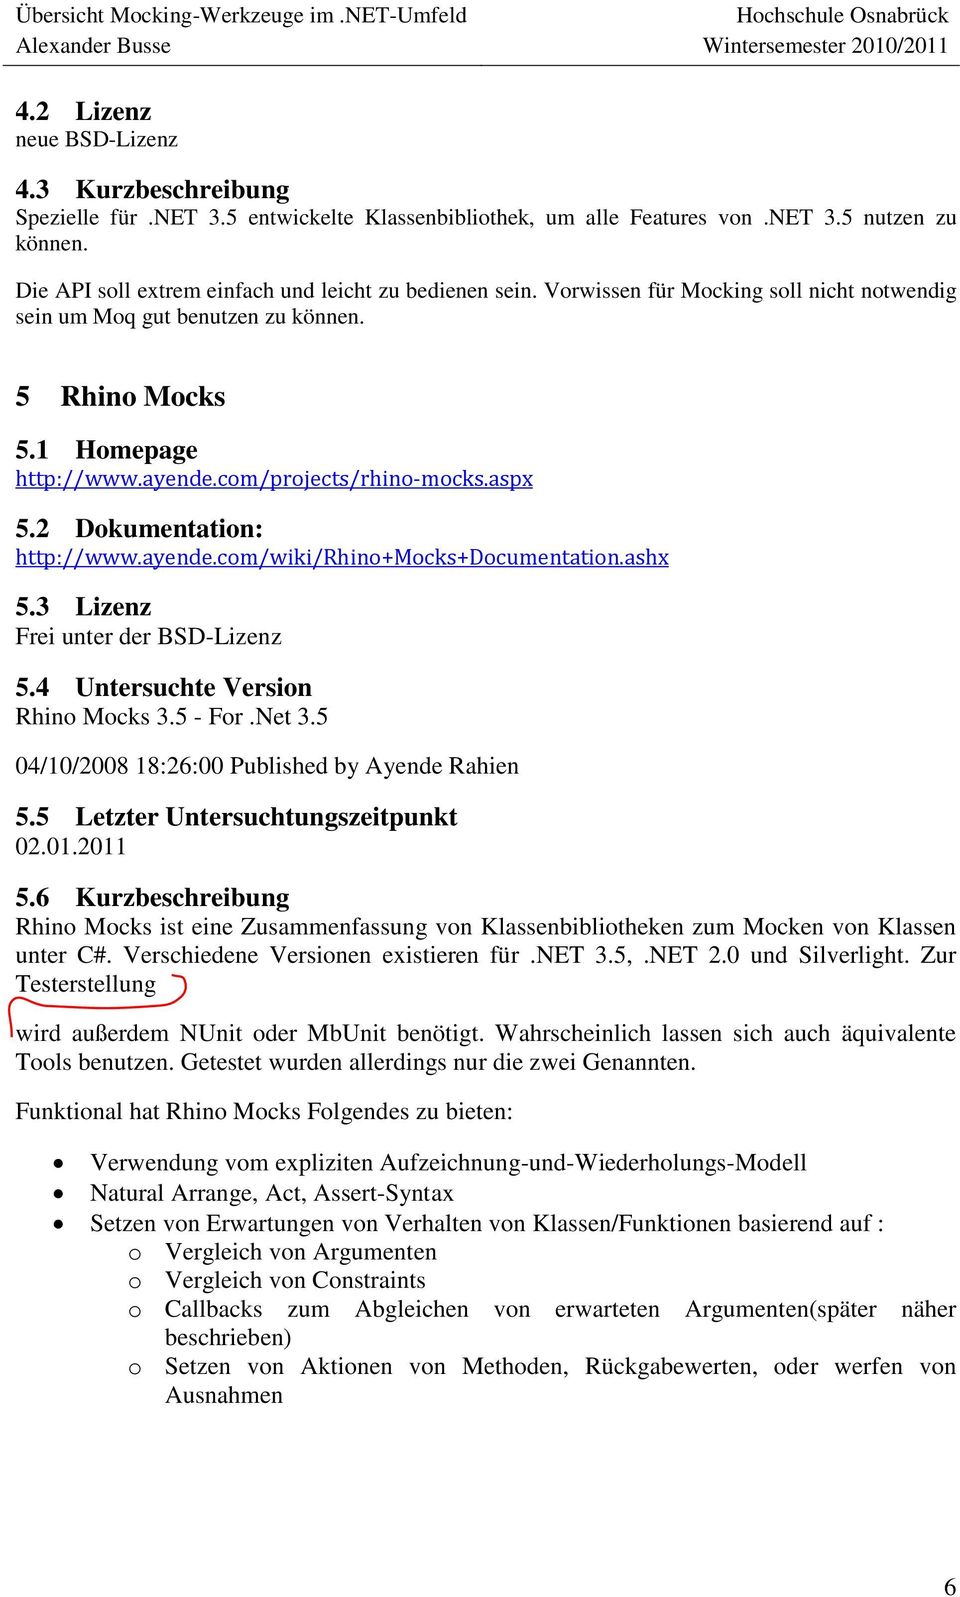 com/projects/rhino-mocks.aspx 5.2 Dokumentation: http://www.ayende.com/wiki/rhino+mocks+documentation.ashx 5.3 Lizenz Frei unter der BSD-Lizenz 5.4 Untersuchte Version Rhino Mocks 3.5 - For.Net 3.